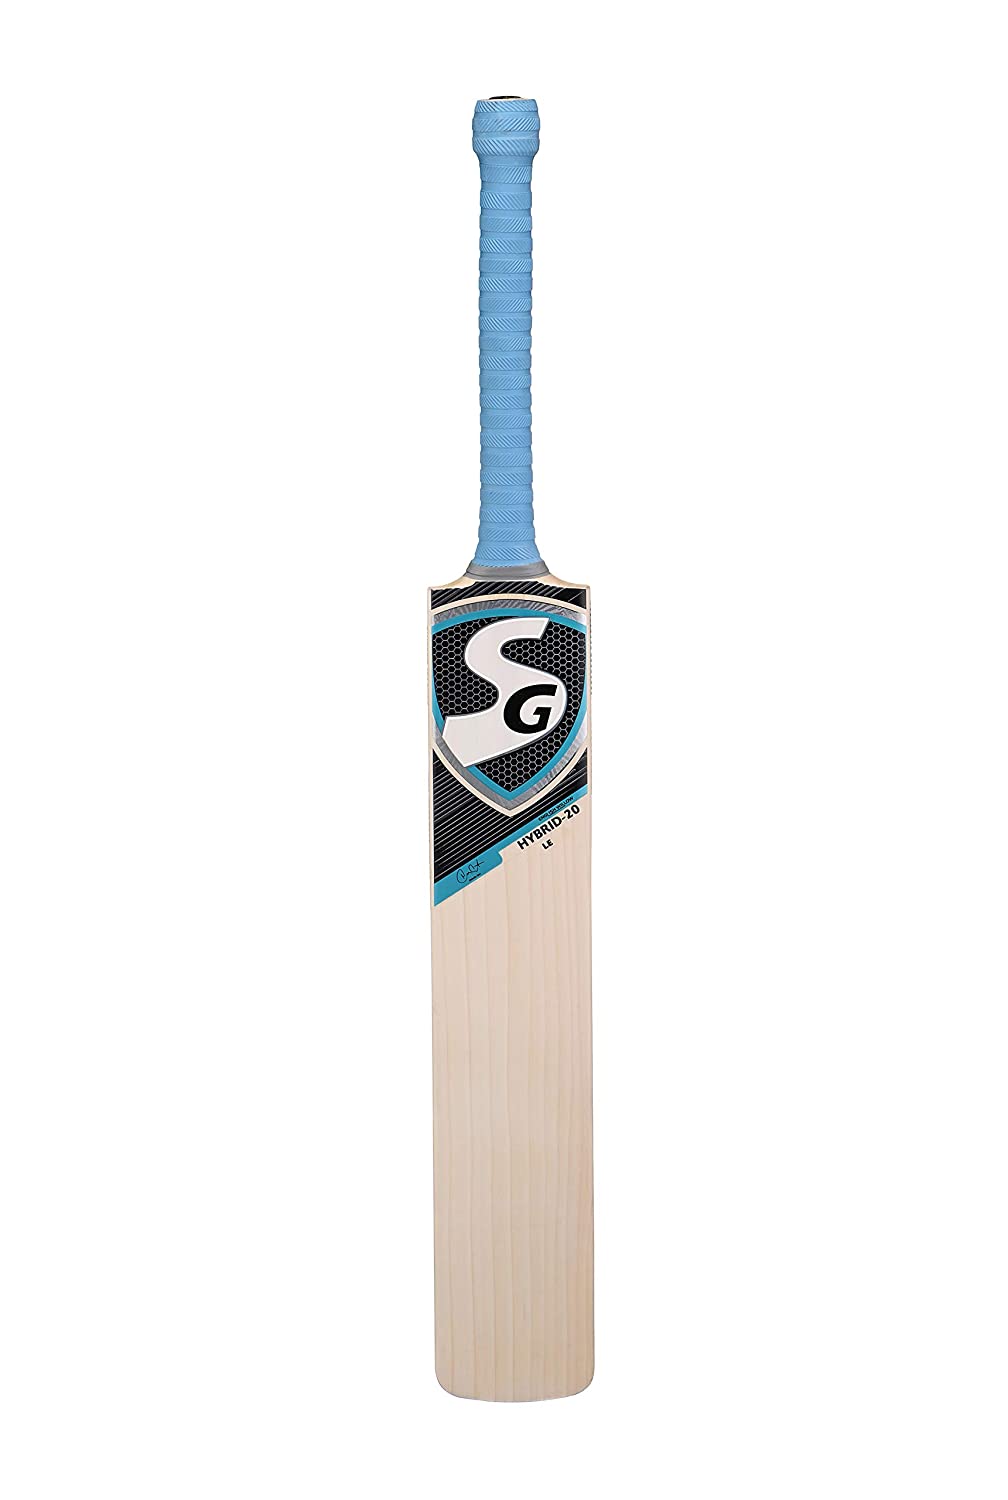 SG HYBRID-20 Cricket BAT,